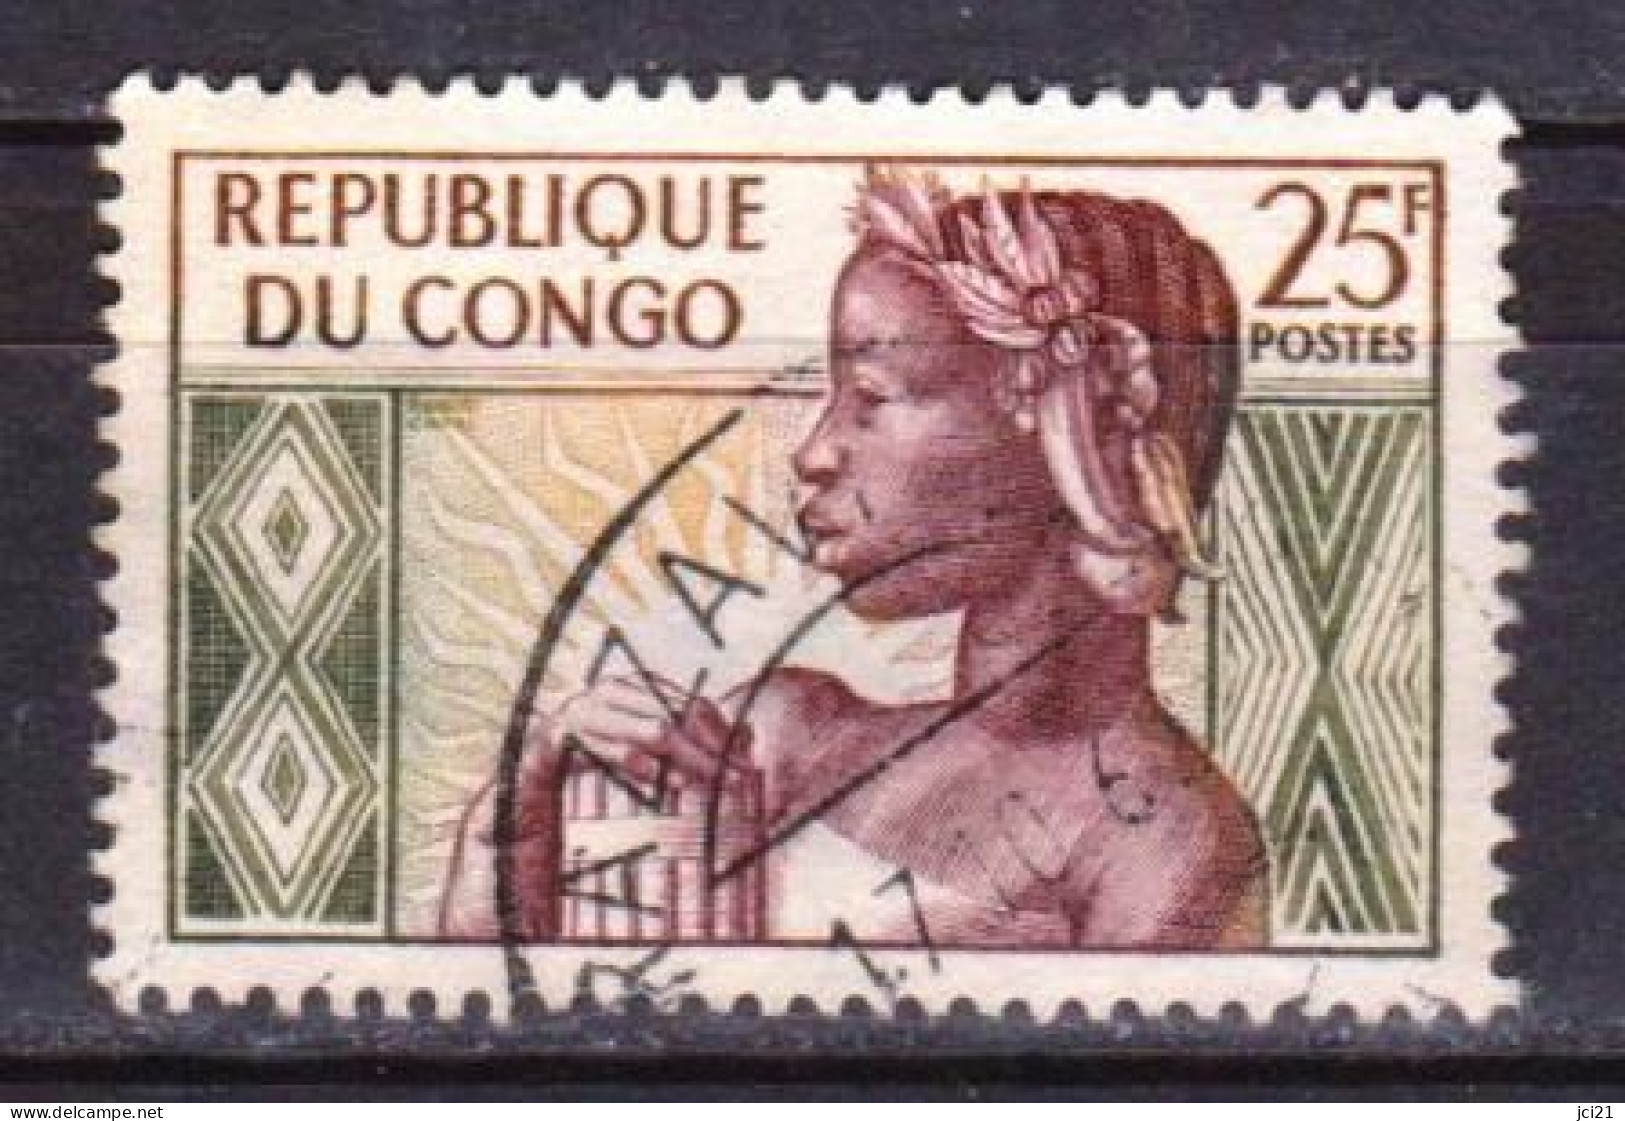 TIMBRE REPUBLIQUE DU CONGO JEUNE INDIGÈNE (2061)_Ti1170 - Used